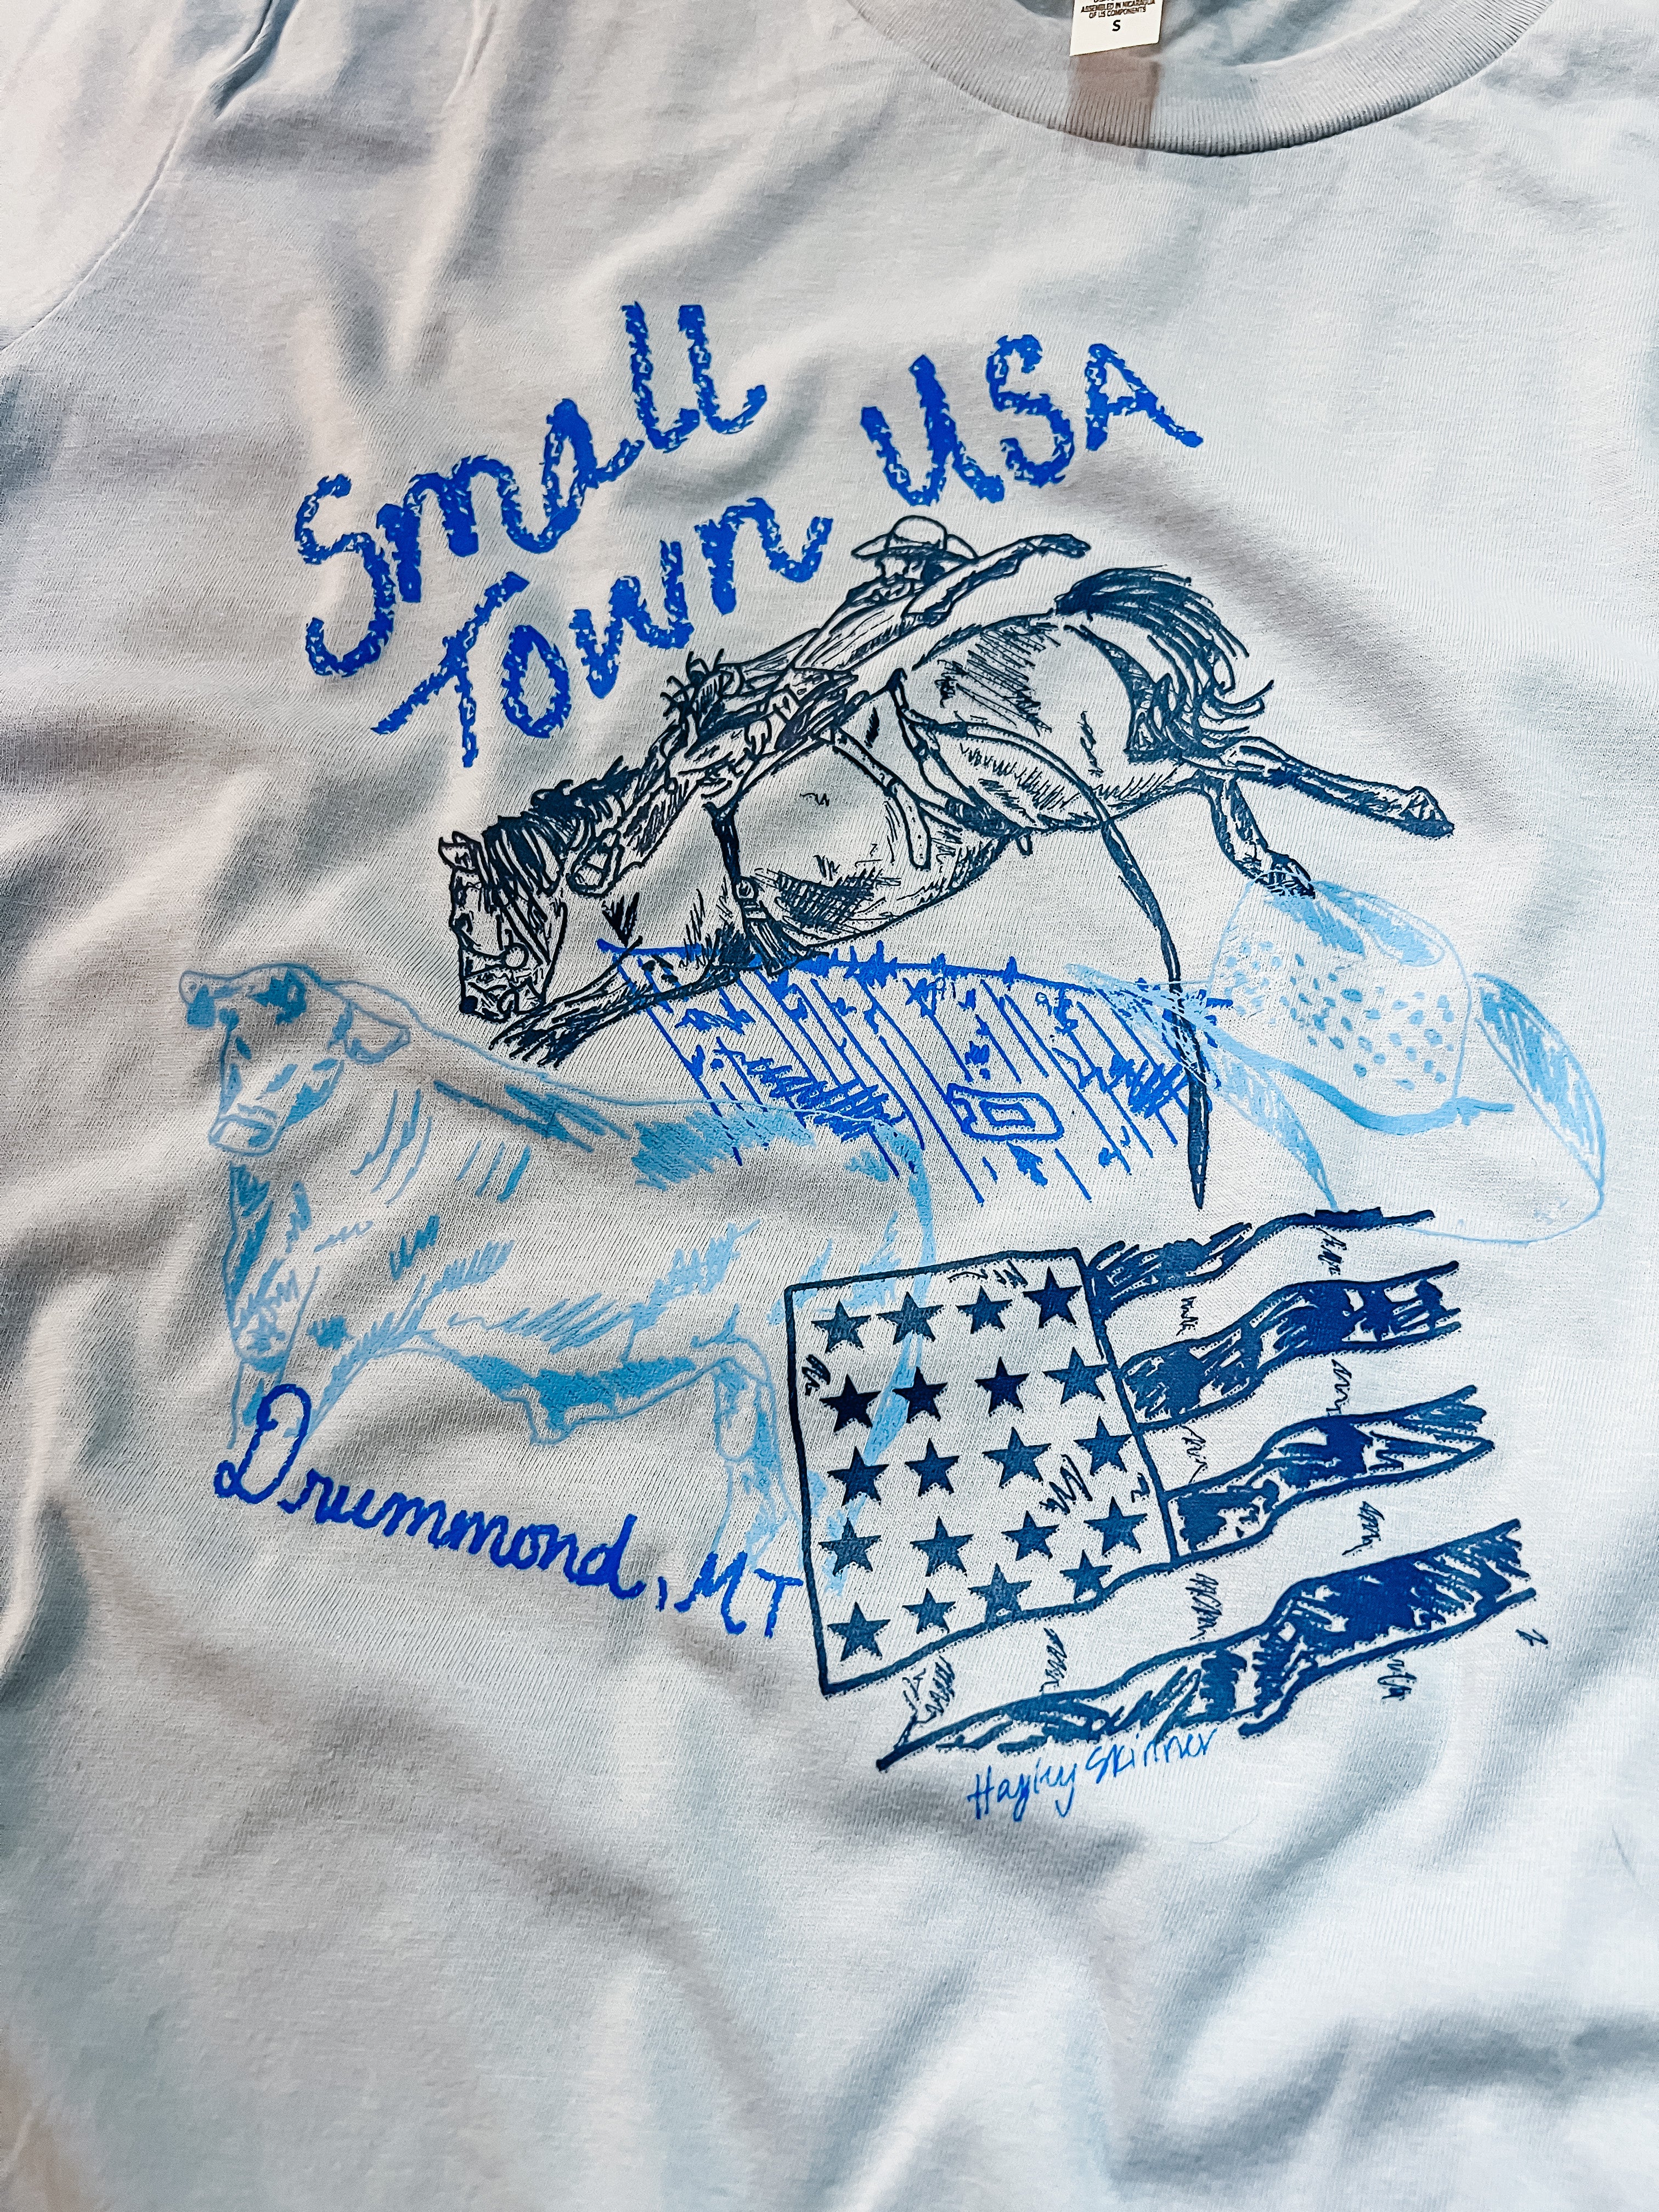 Small Town USA T-shirt